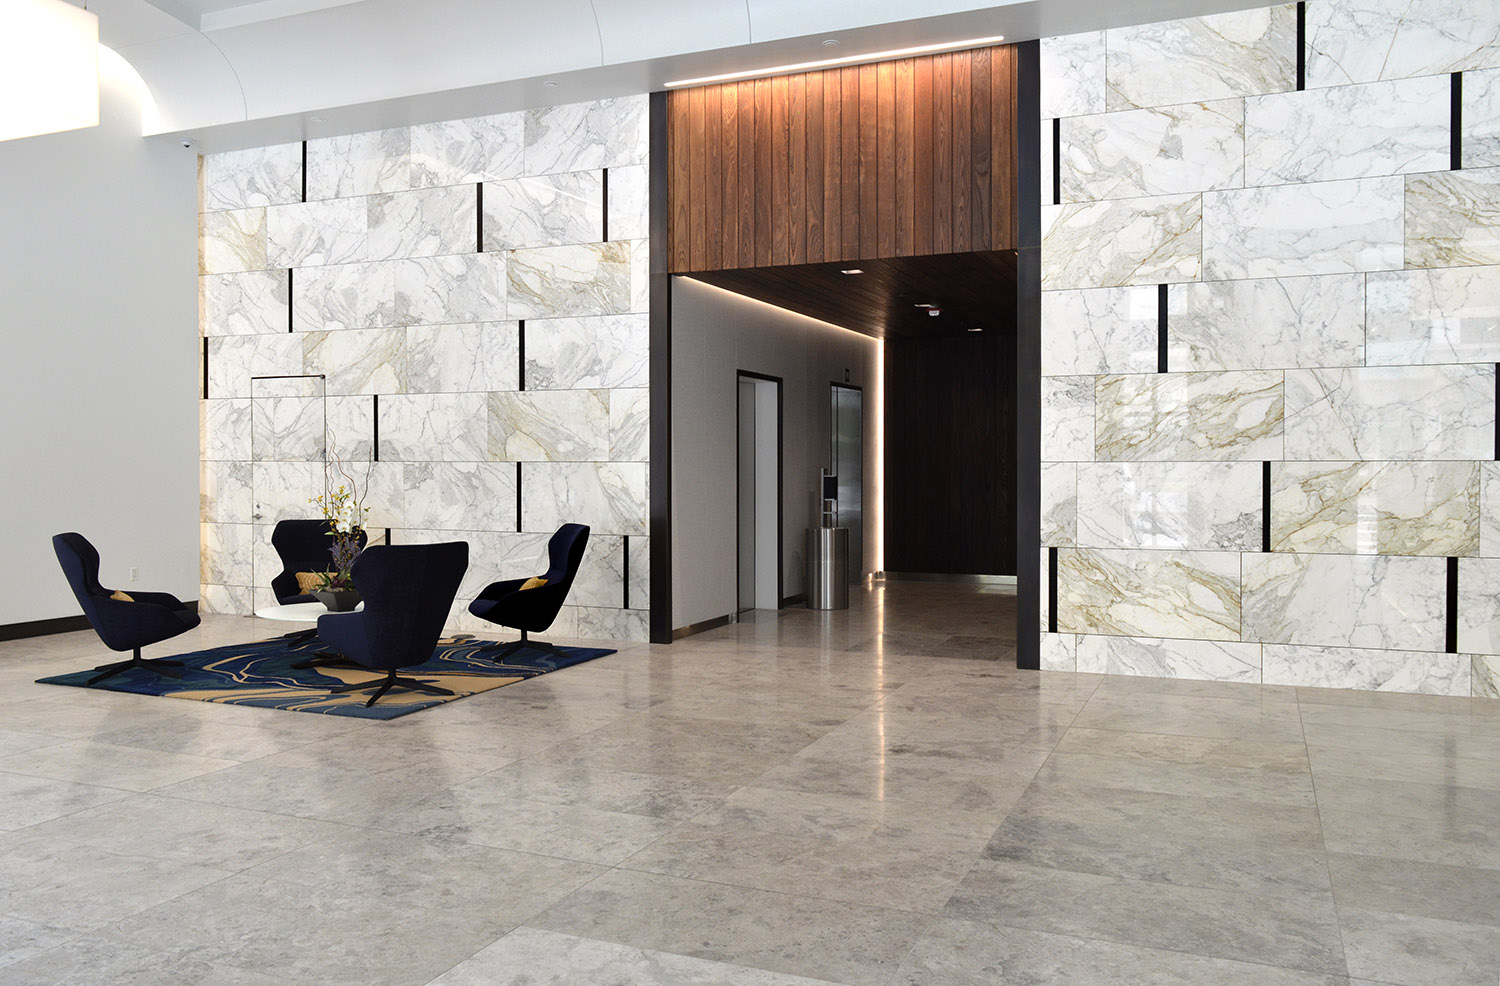 Calacatta Borghini marble featured on lobby walls